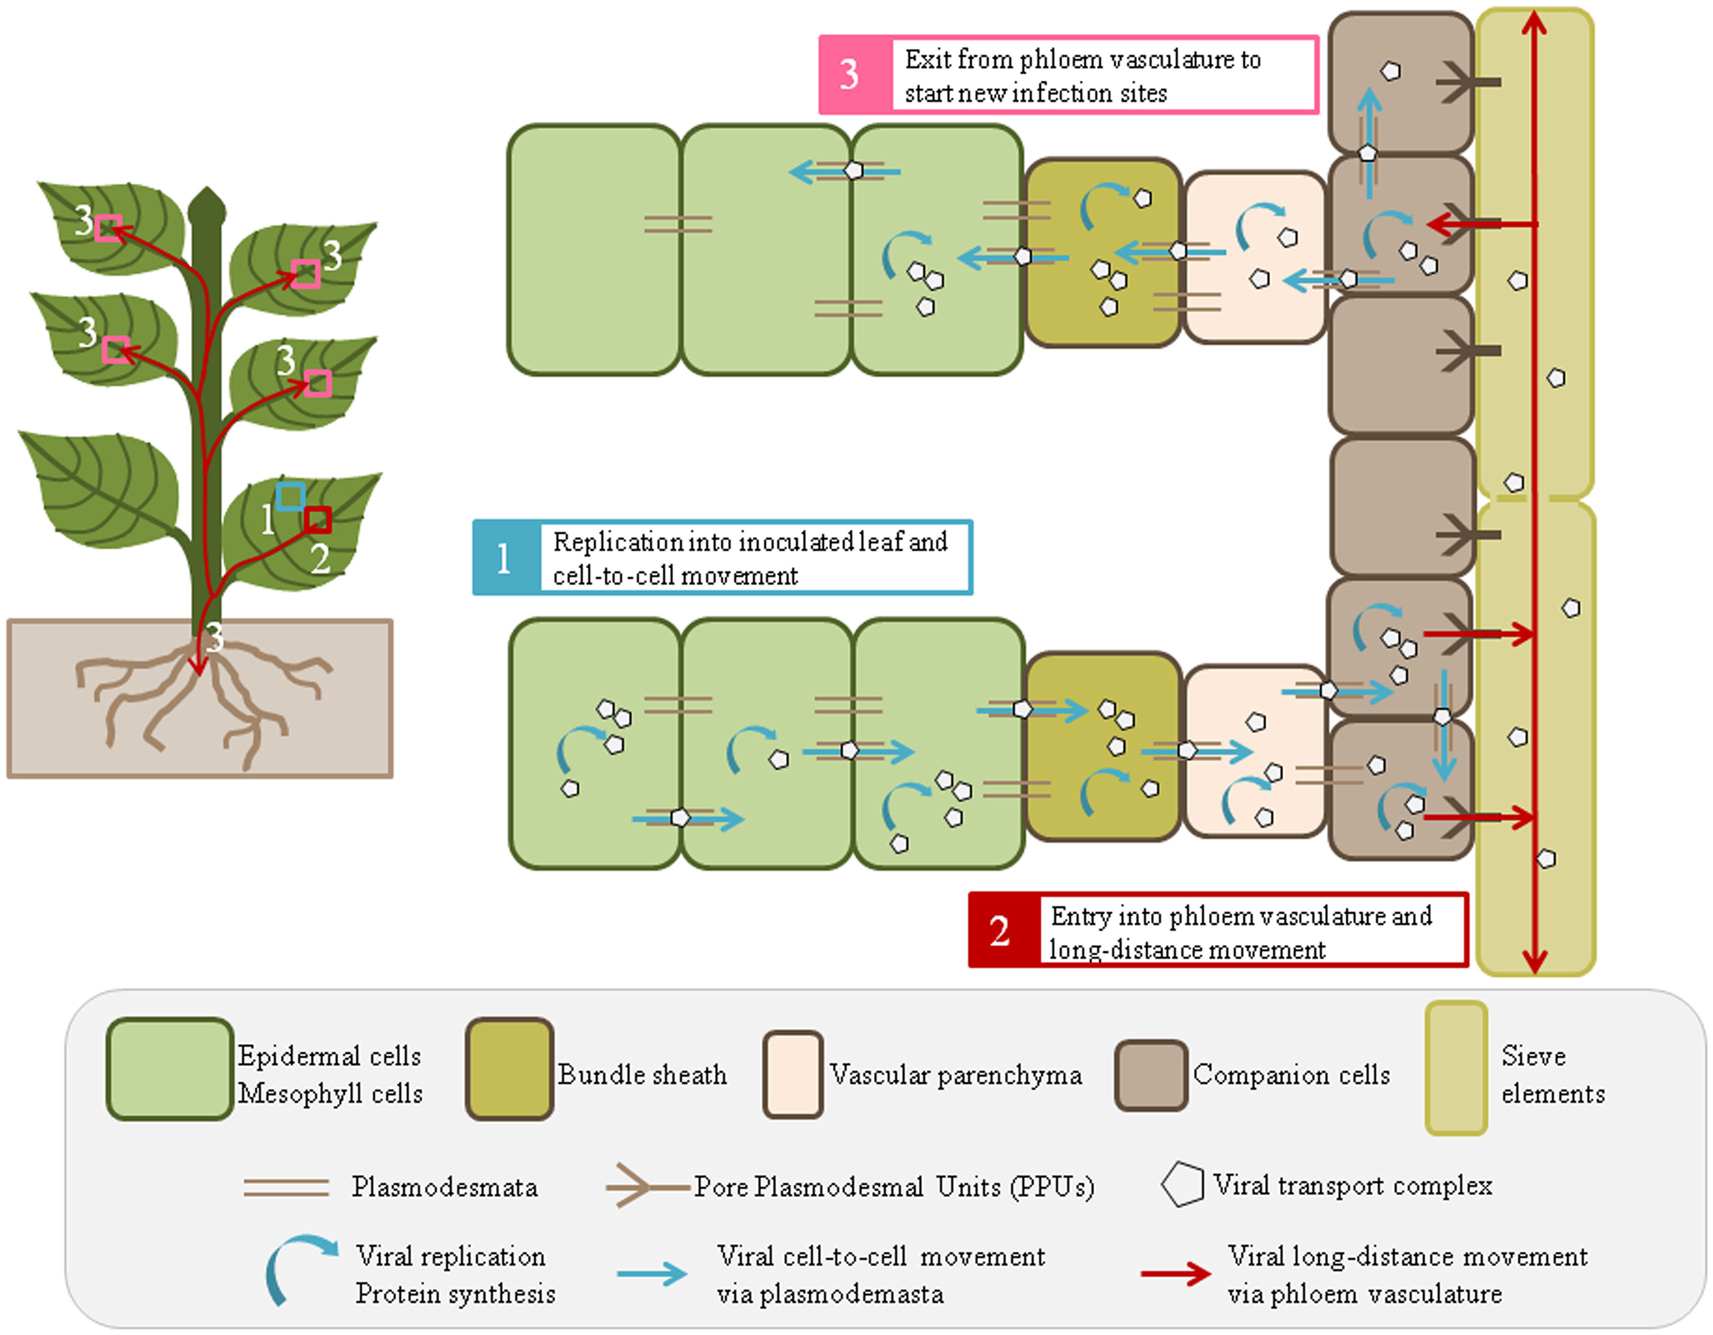 plant virus replication